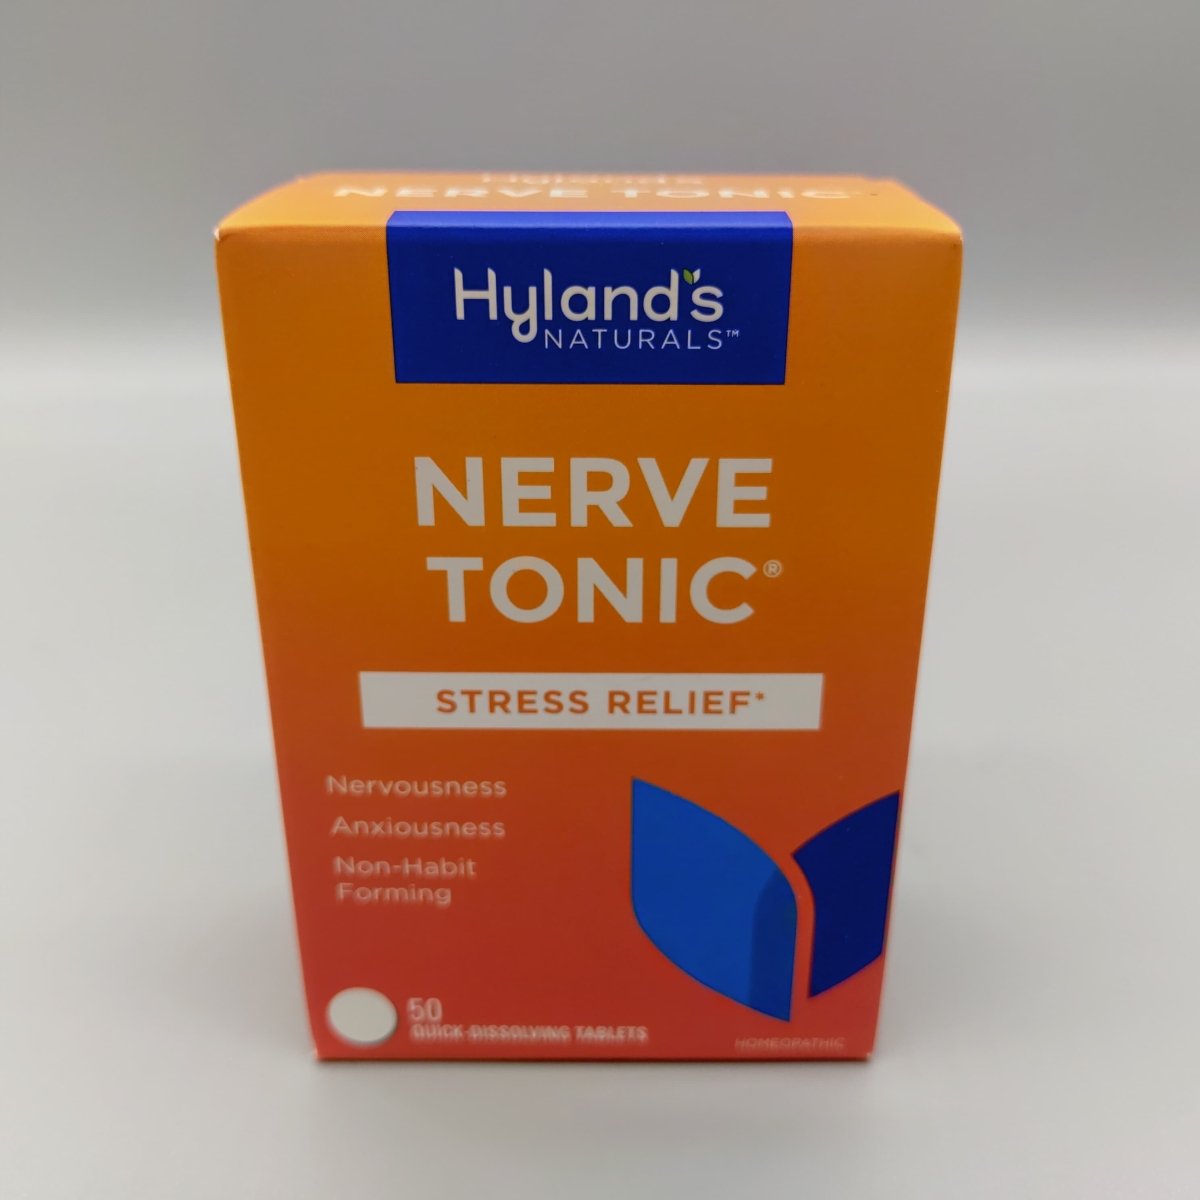 Nerve tonic 50 Tabletas - Hyland's